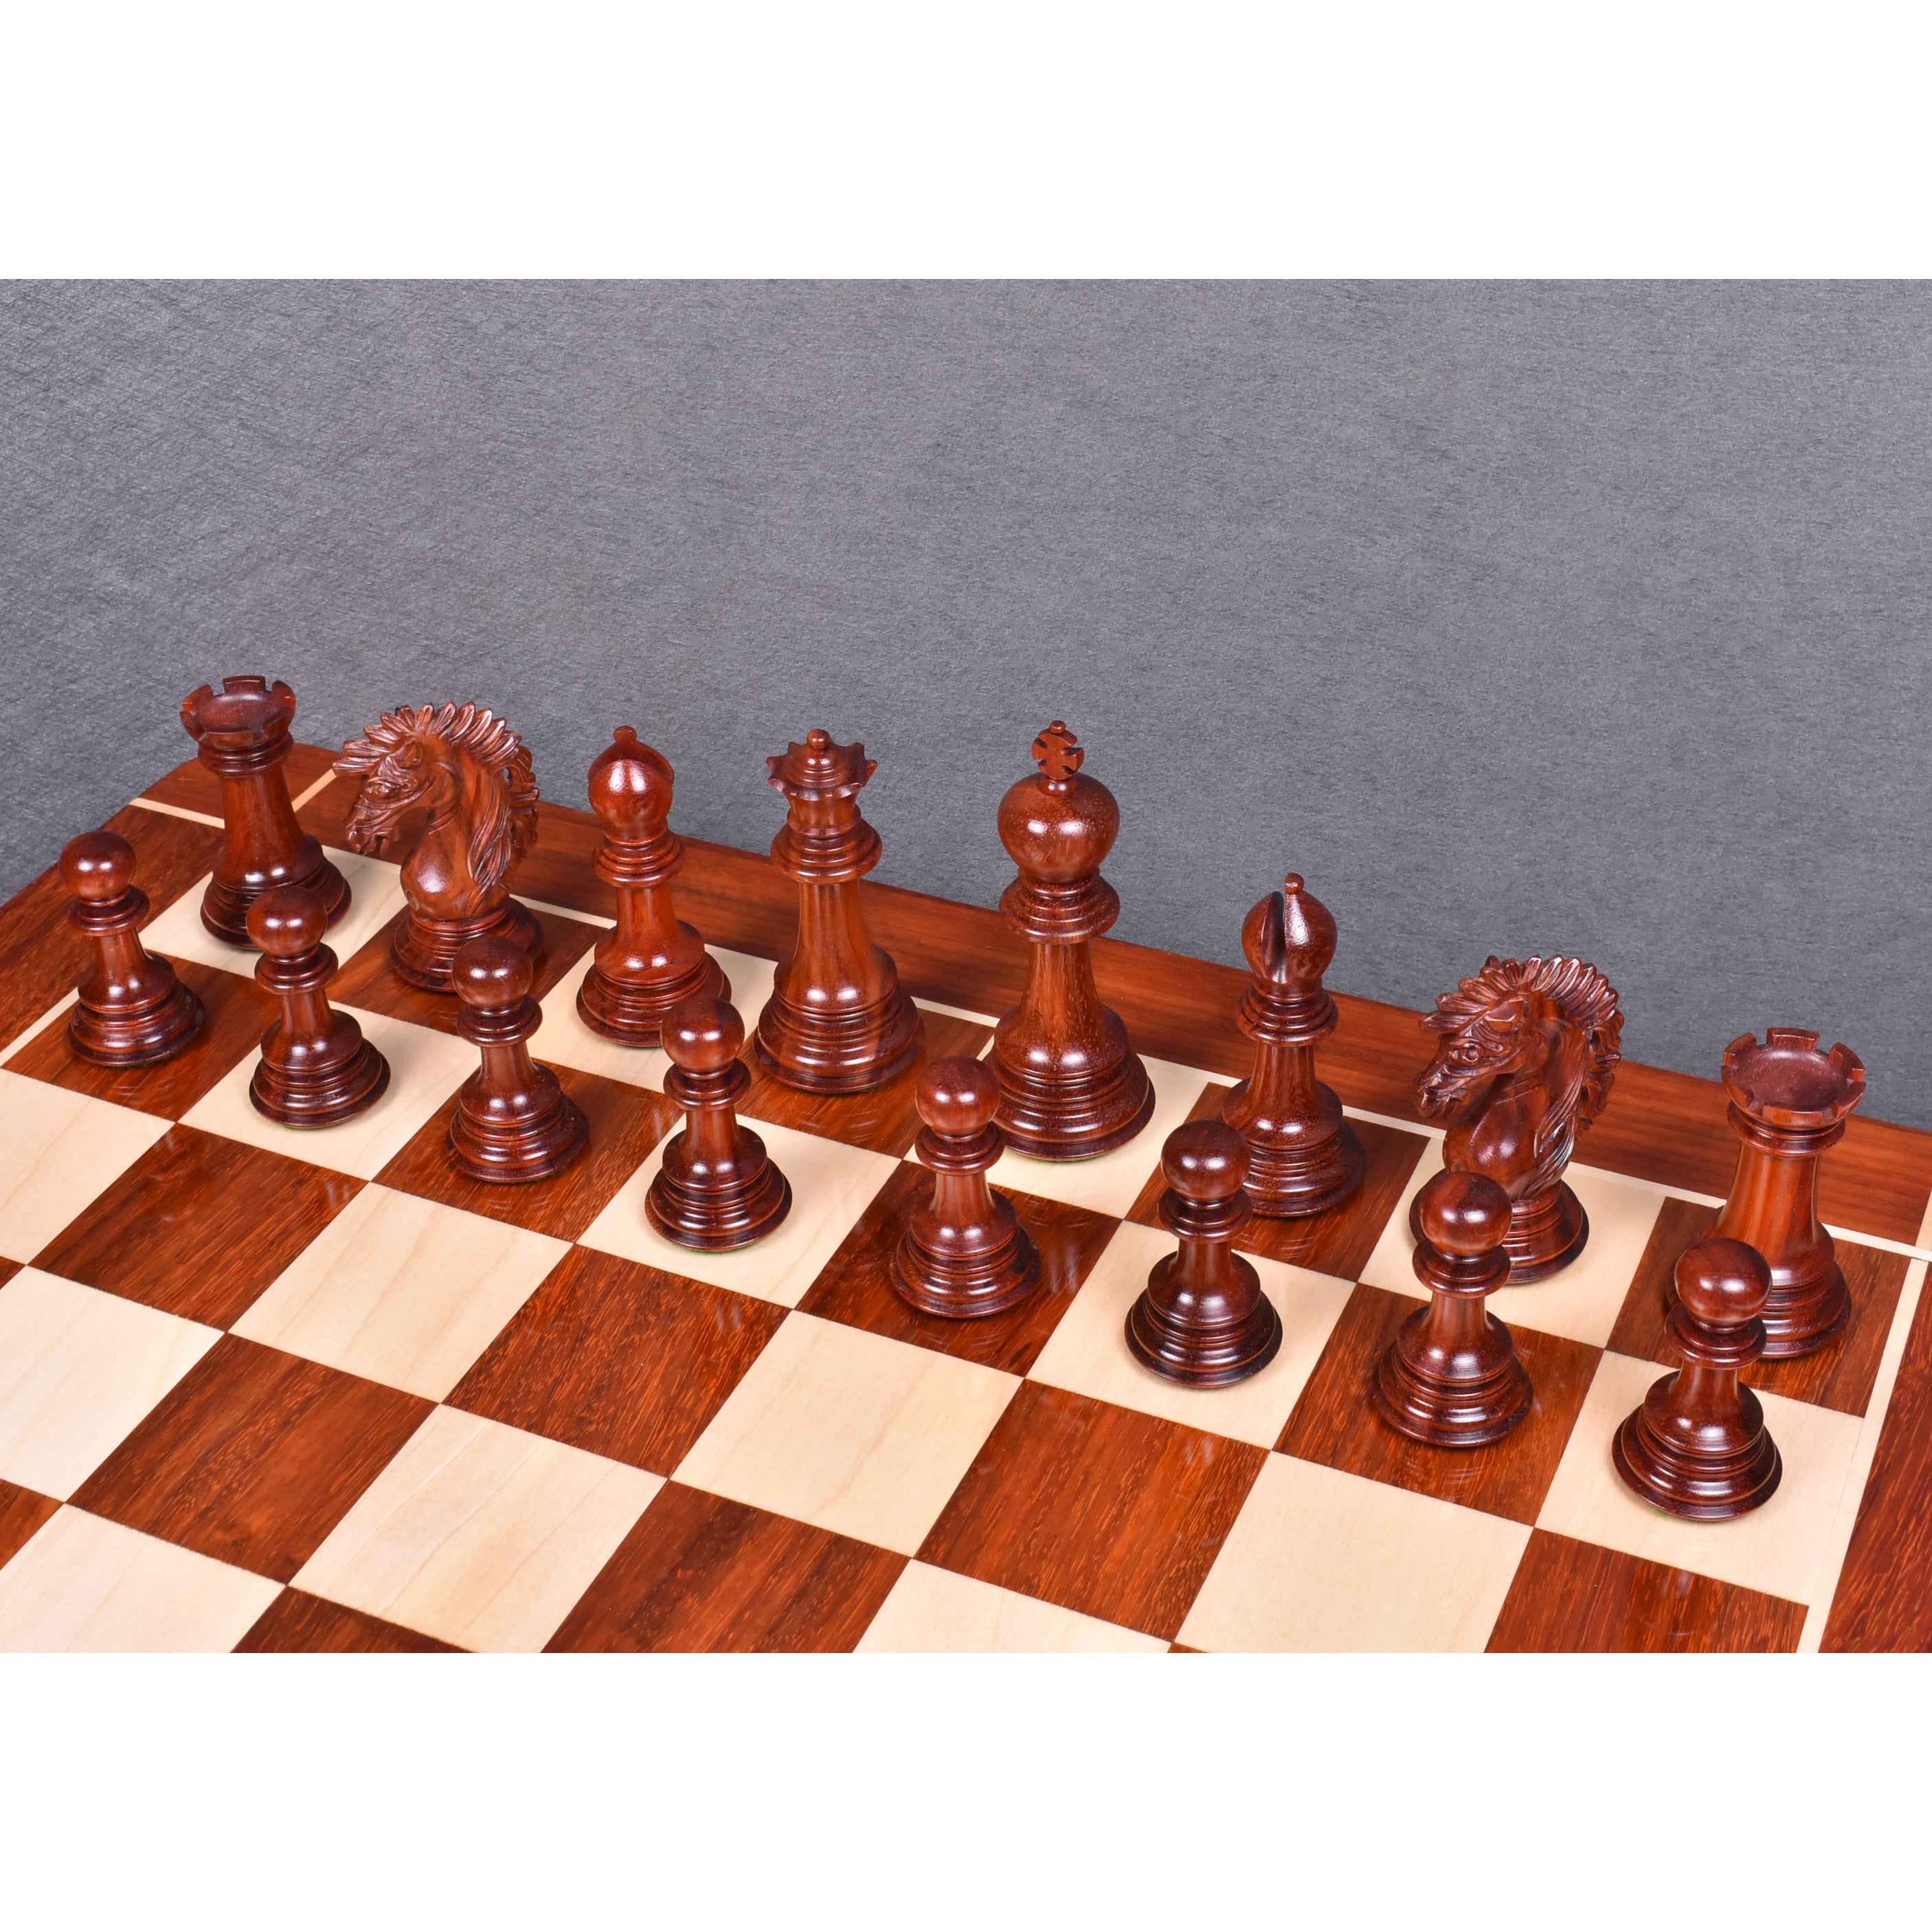 4.6 Mogul Staunton Luxury Chess Set- Chess Pieces Only - Triple